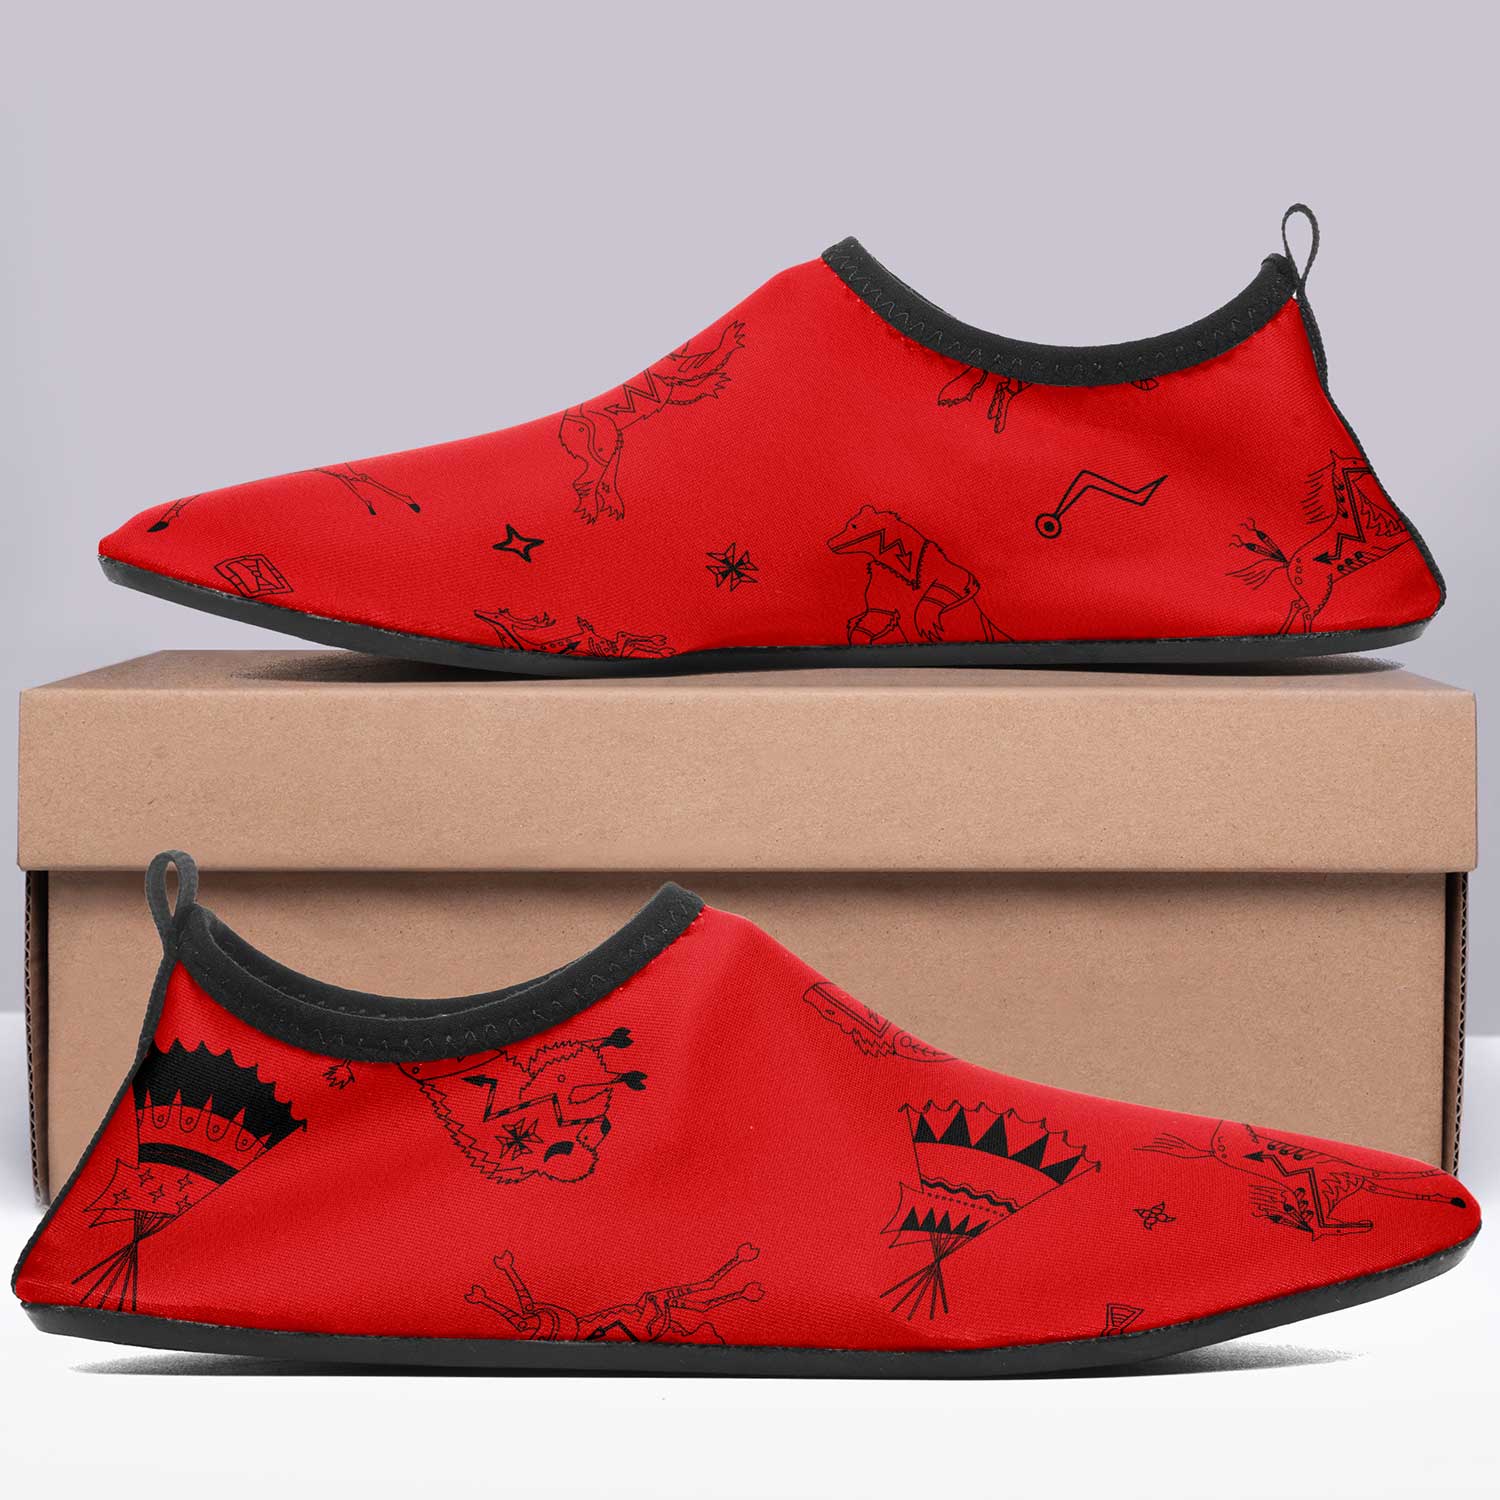 Ledger Dabbles Red Kid's Sockamoccs Slip On Shoes